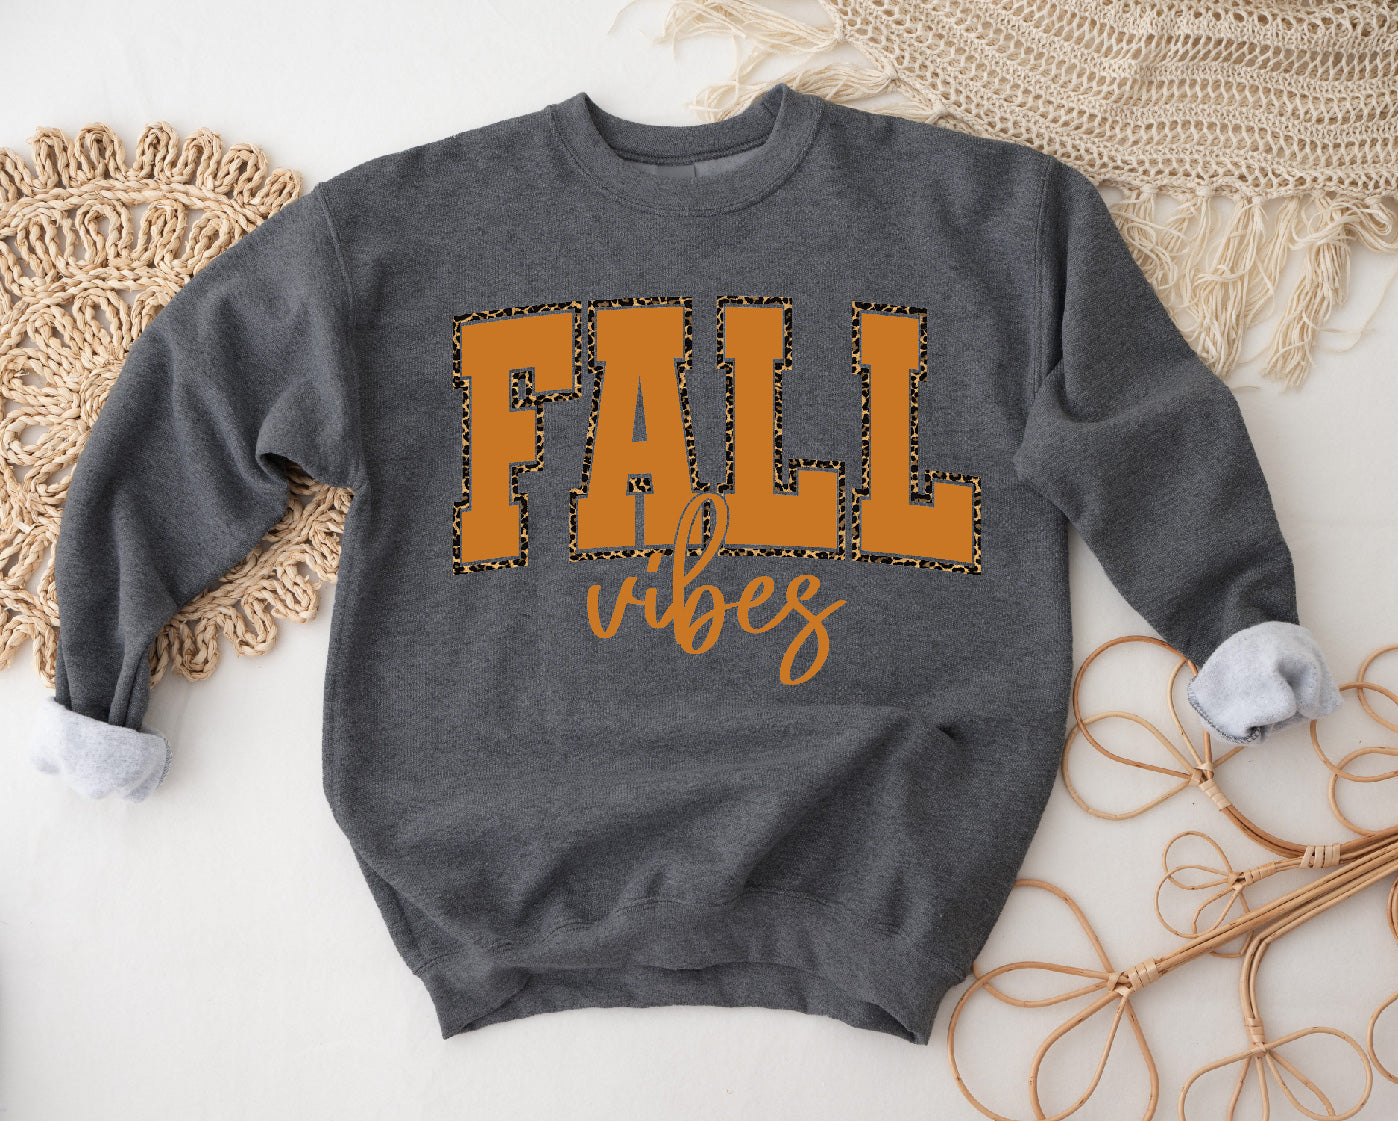 Fall Vibes on a Charcoal Sweatshirt